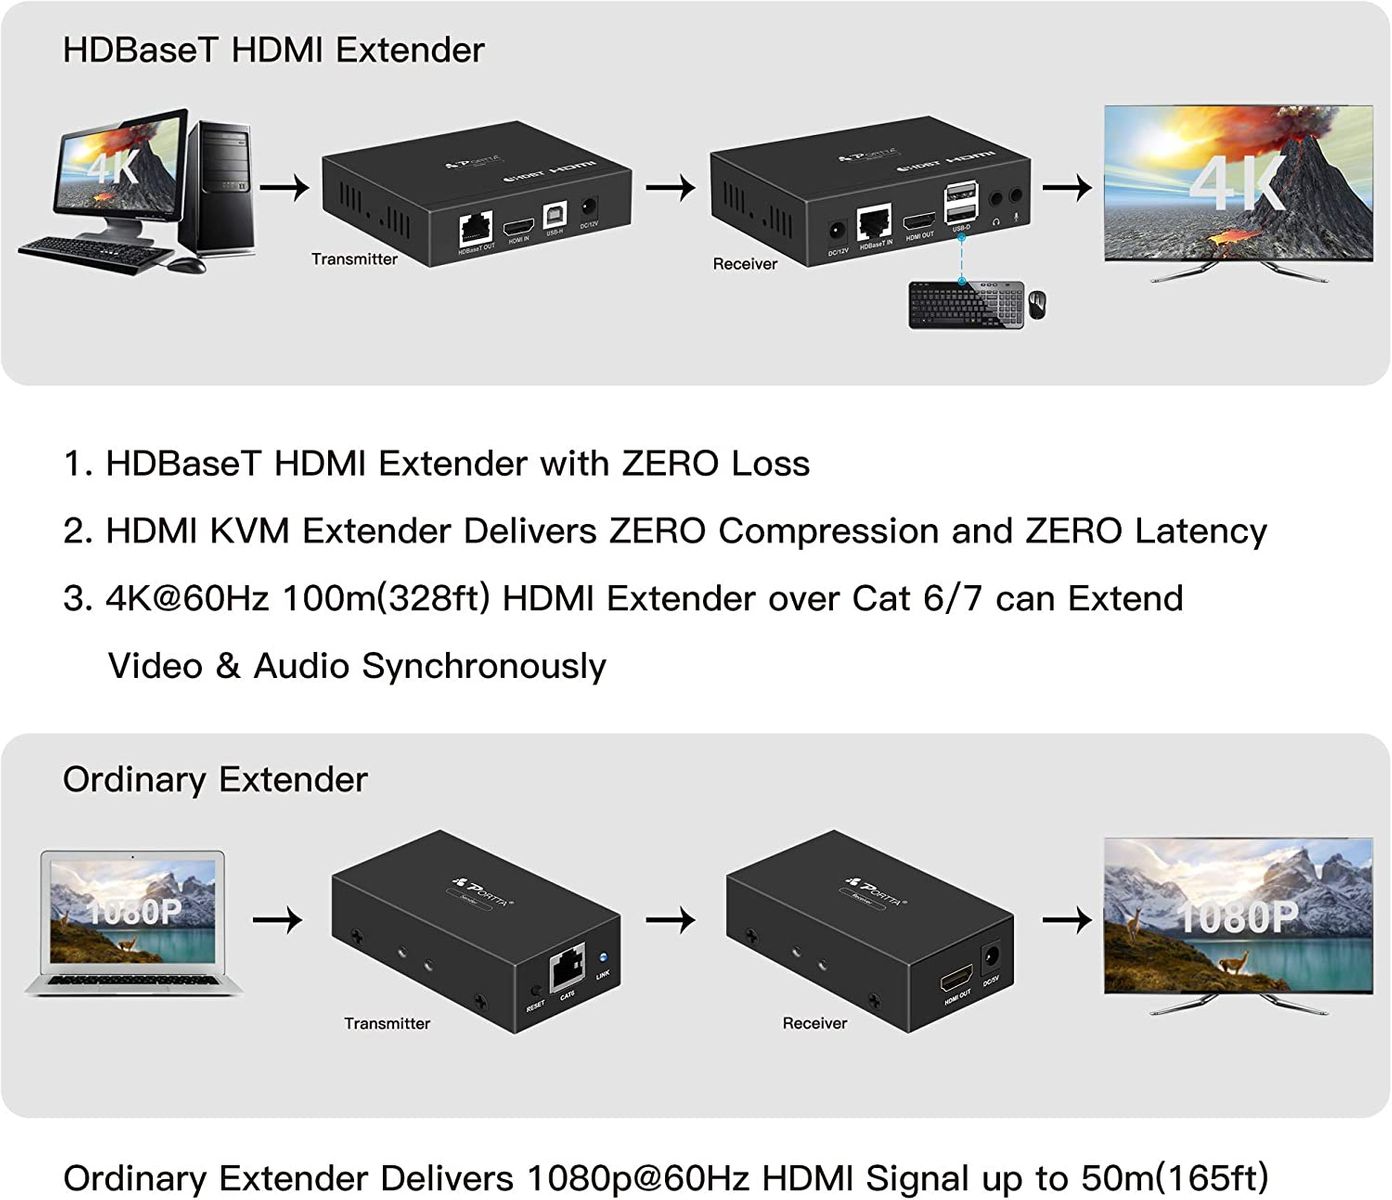 Portta HDMI HDBaseT Extender USB2.0 KVM Extension 4K@60Hz 4:2:0 100M(328ft) HDCP 2.2 über einzige UTP CAT5e/CAT6/CAT7 Ethernet Kabel mit High-Speed 6 Ports USB 2.0 Hub CEC LPCM7.1 DTS Dolby Digital